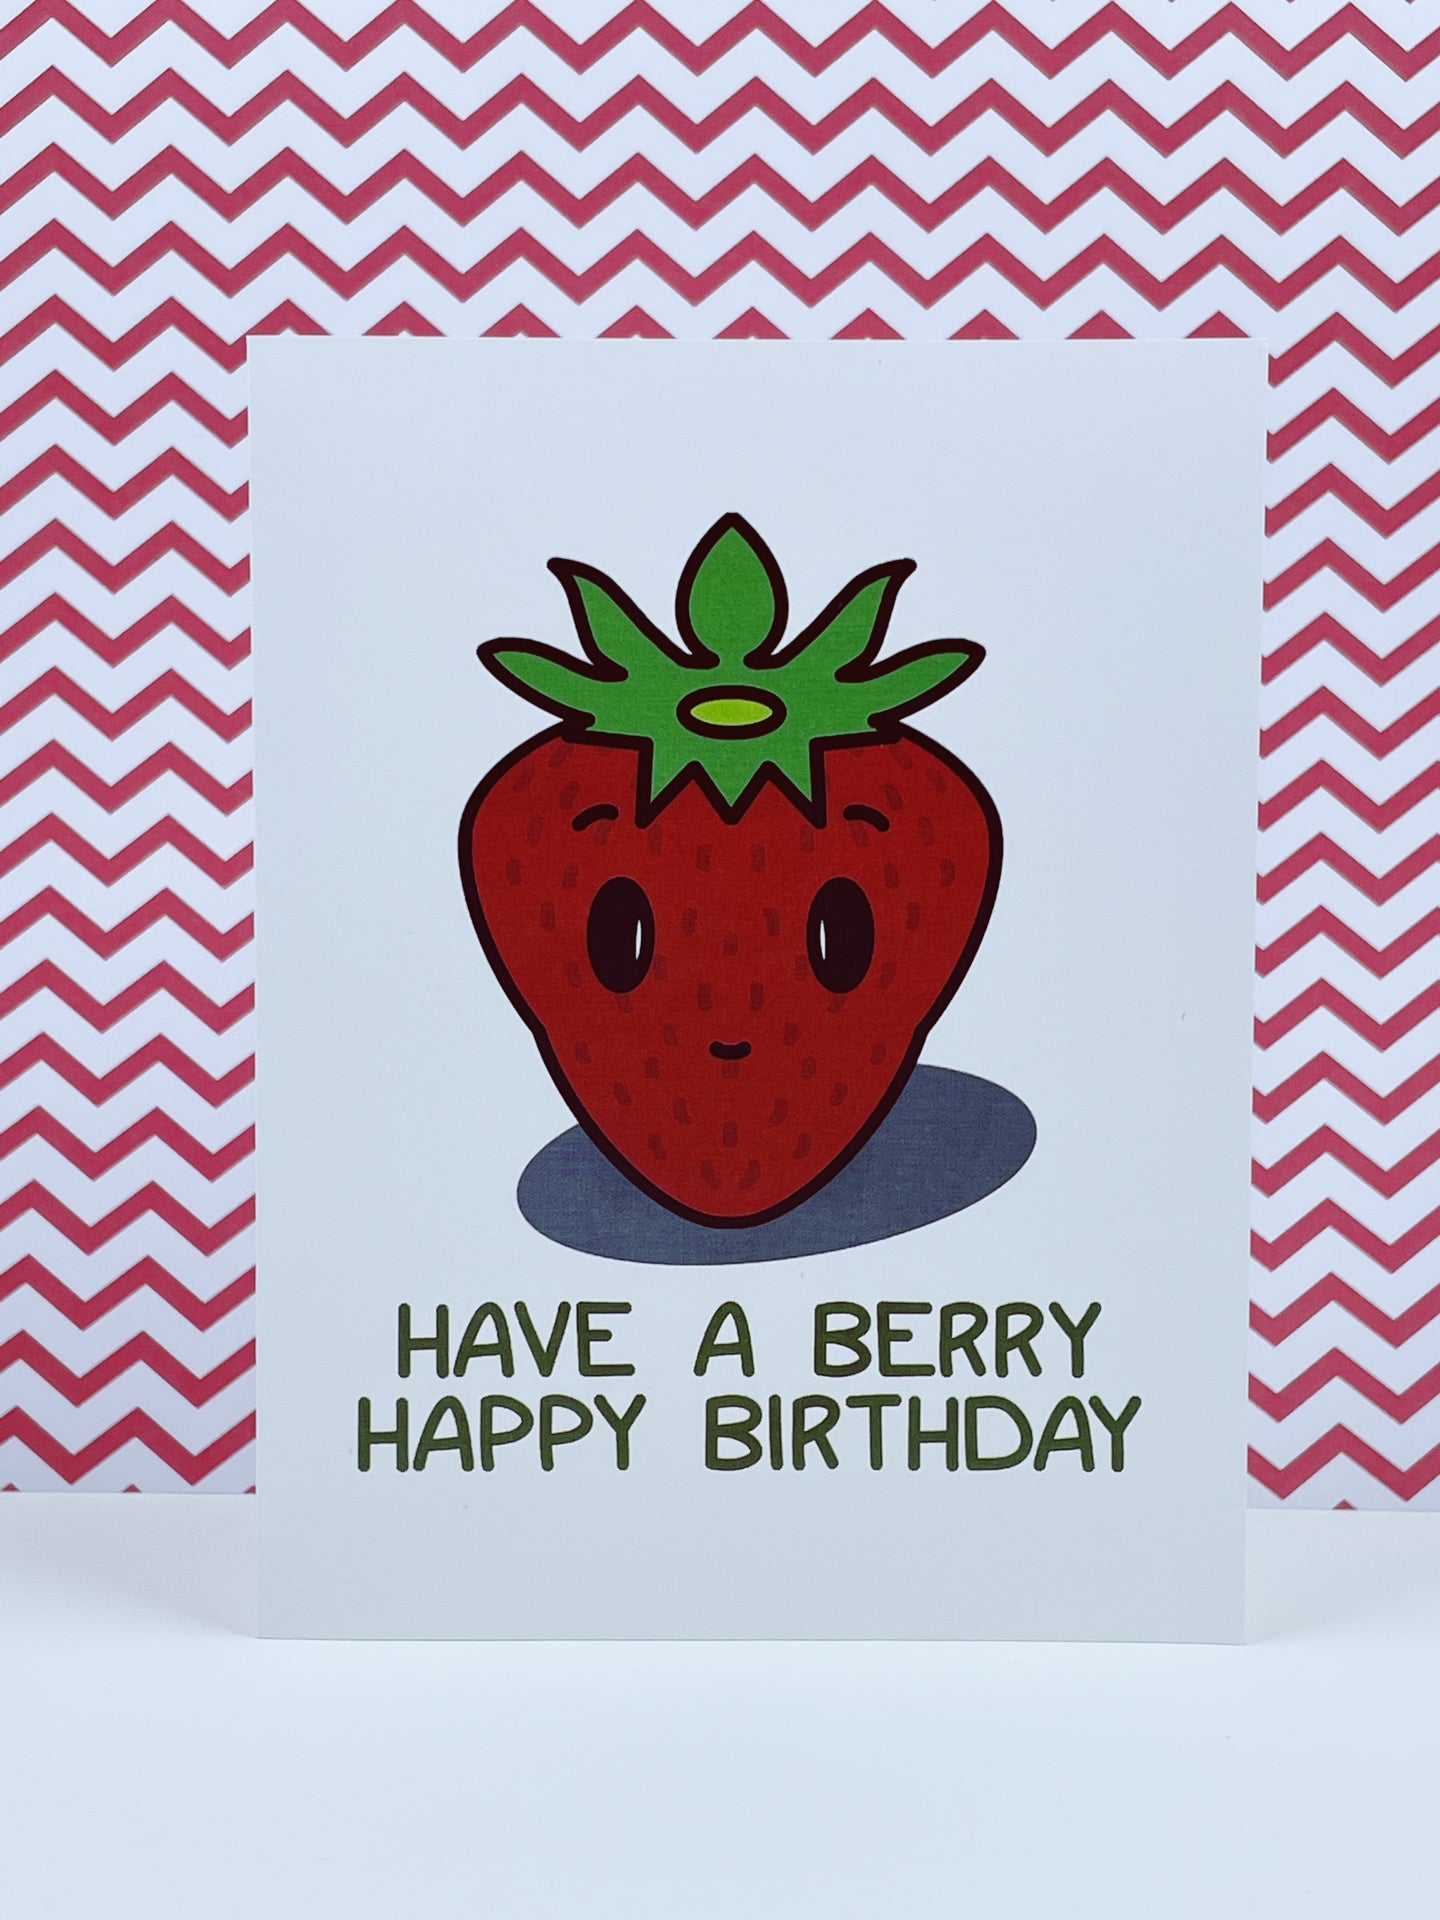 Have a Straw-berry Happy Birthday